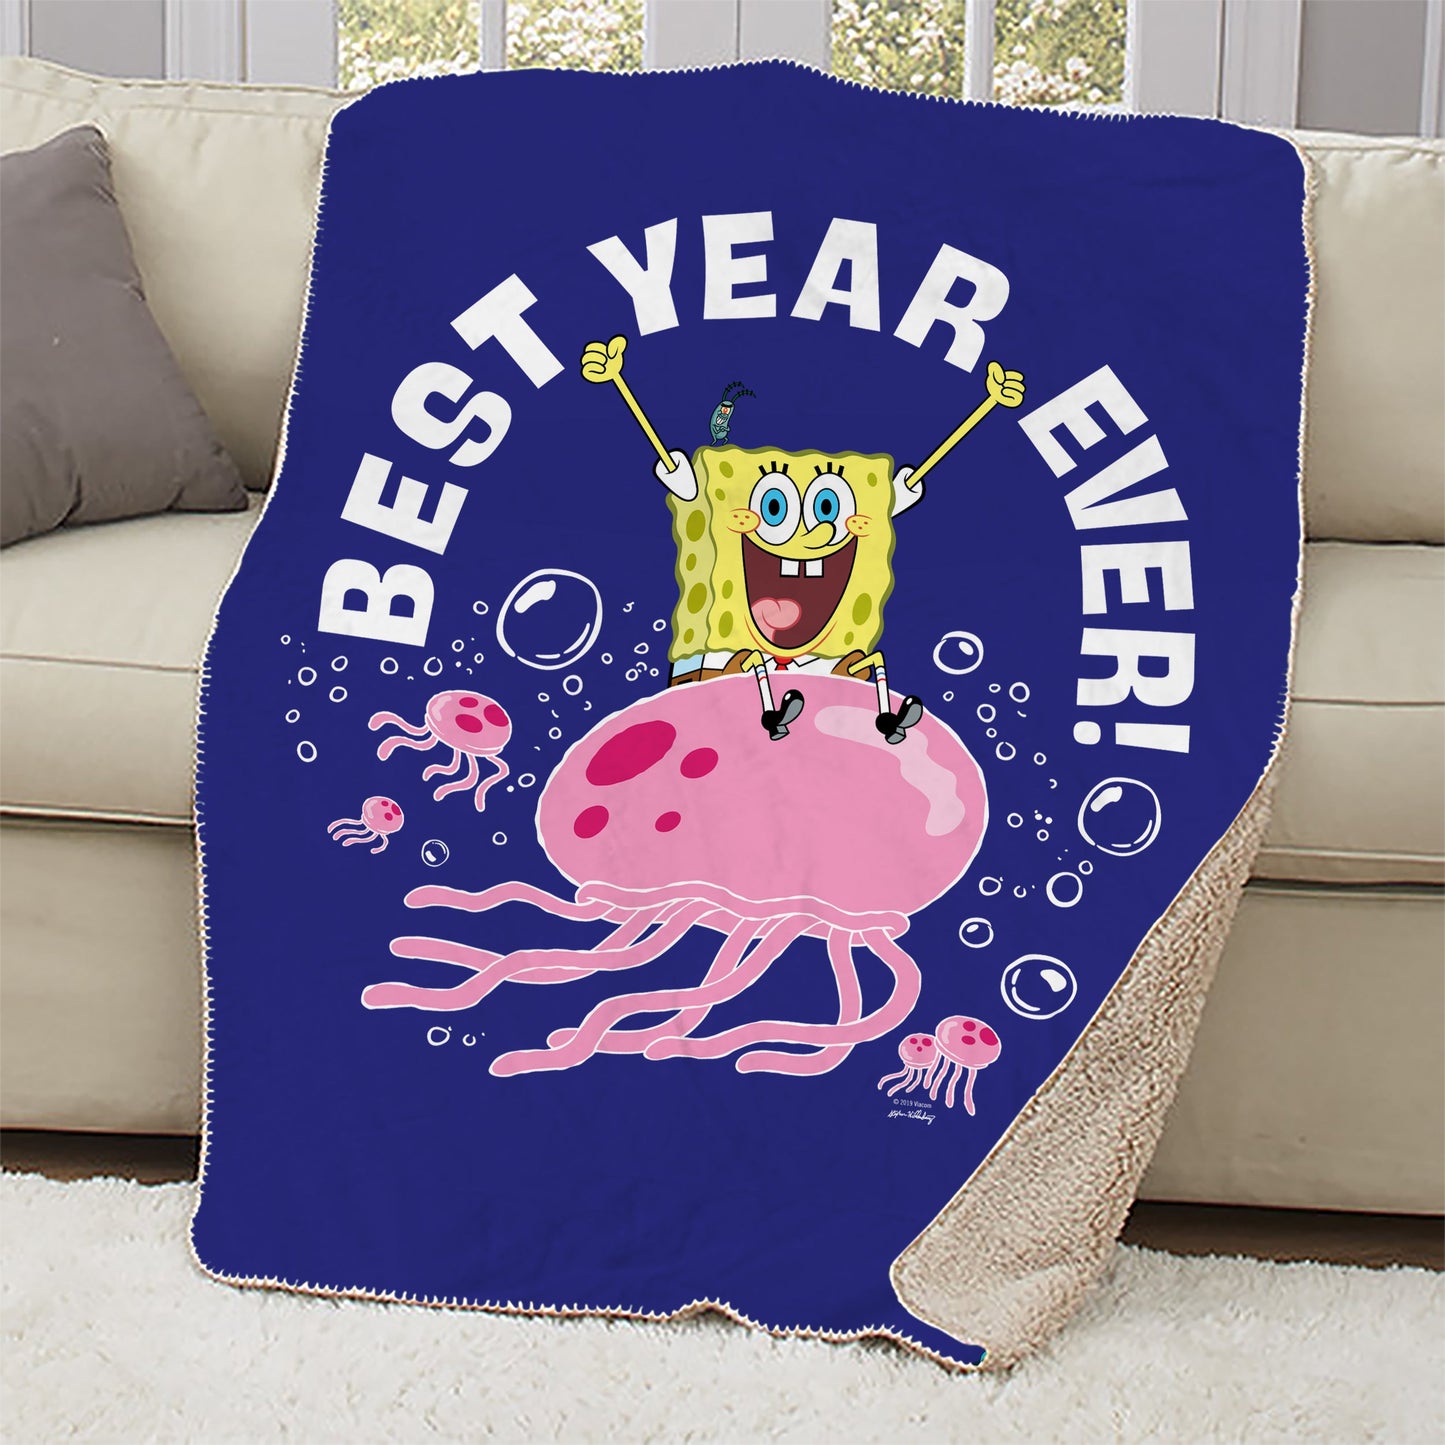 Spongebob Schwammkopf Best Year Ever Qualle Sherpa-Decke